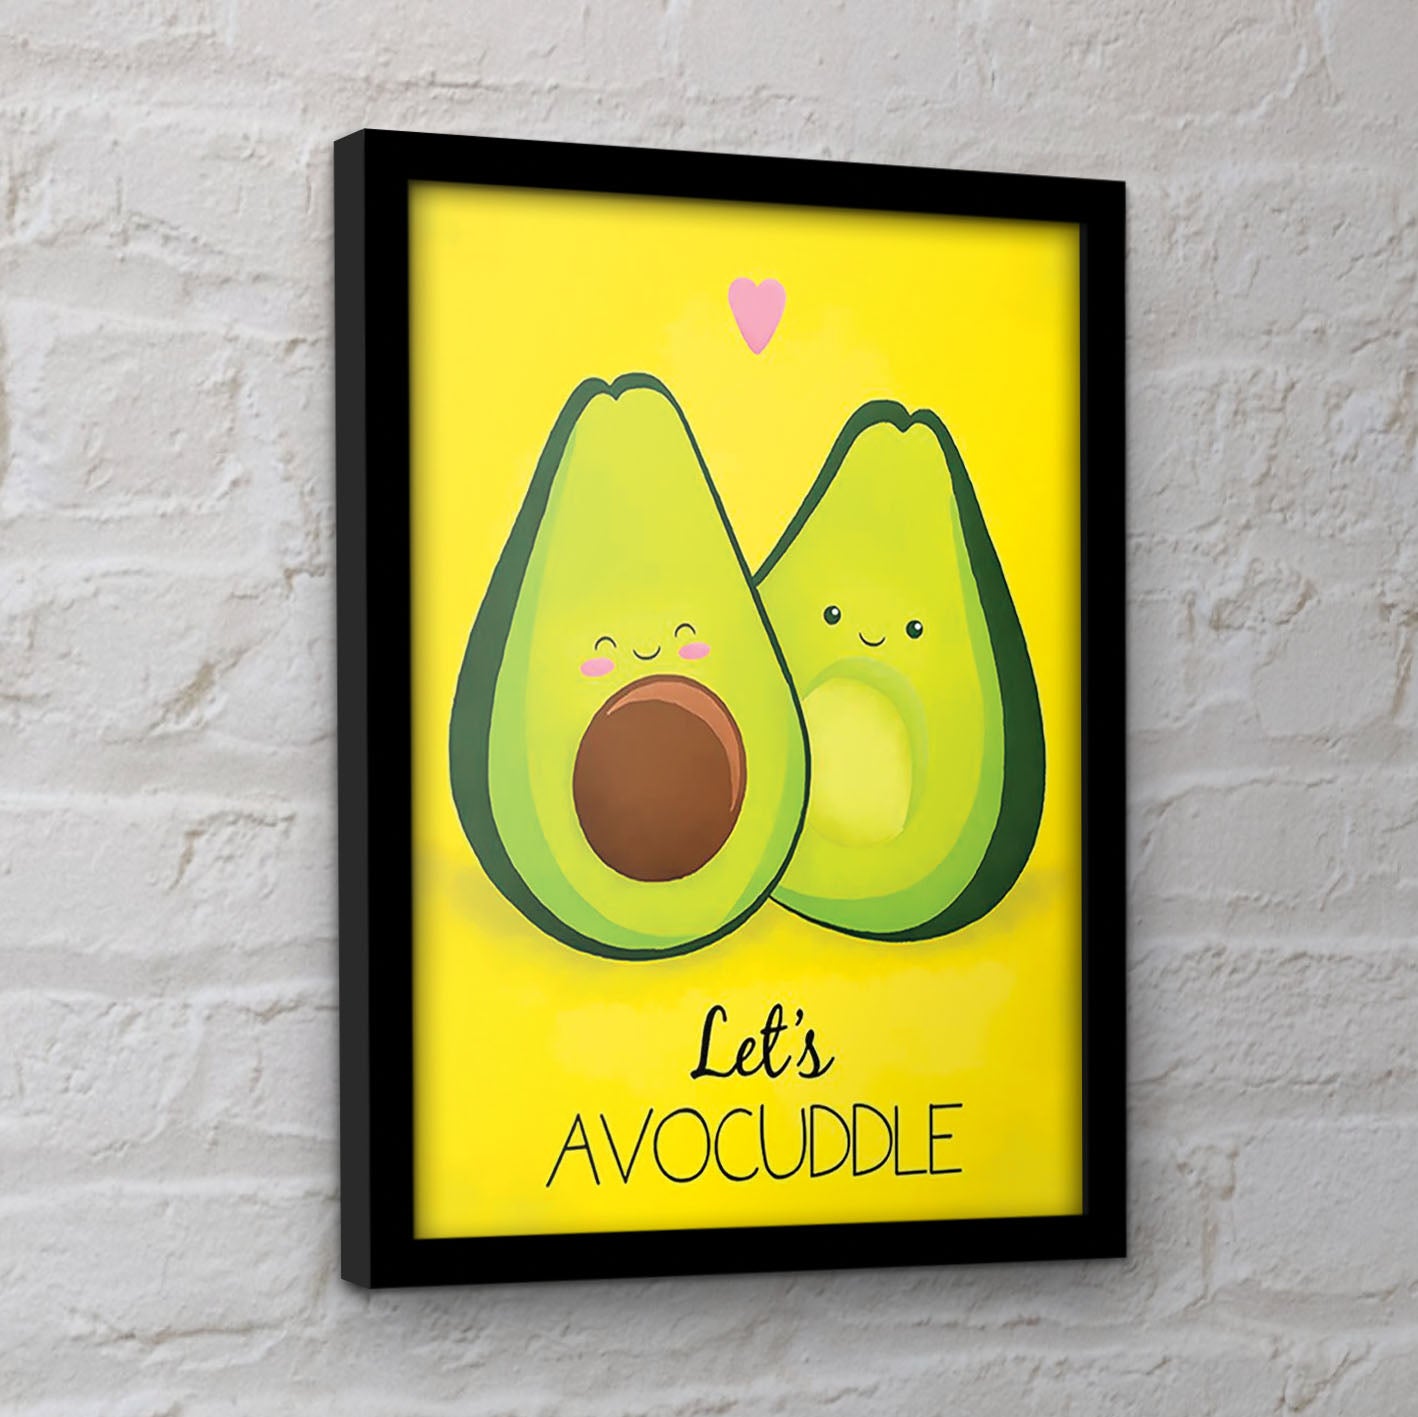 Avocado (Lets Avocuddle) – Pyramid International